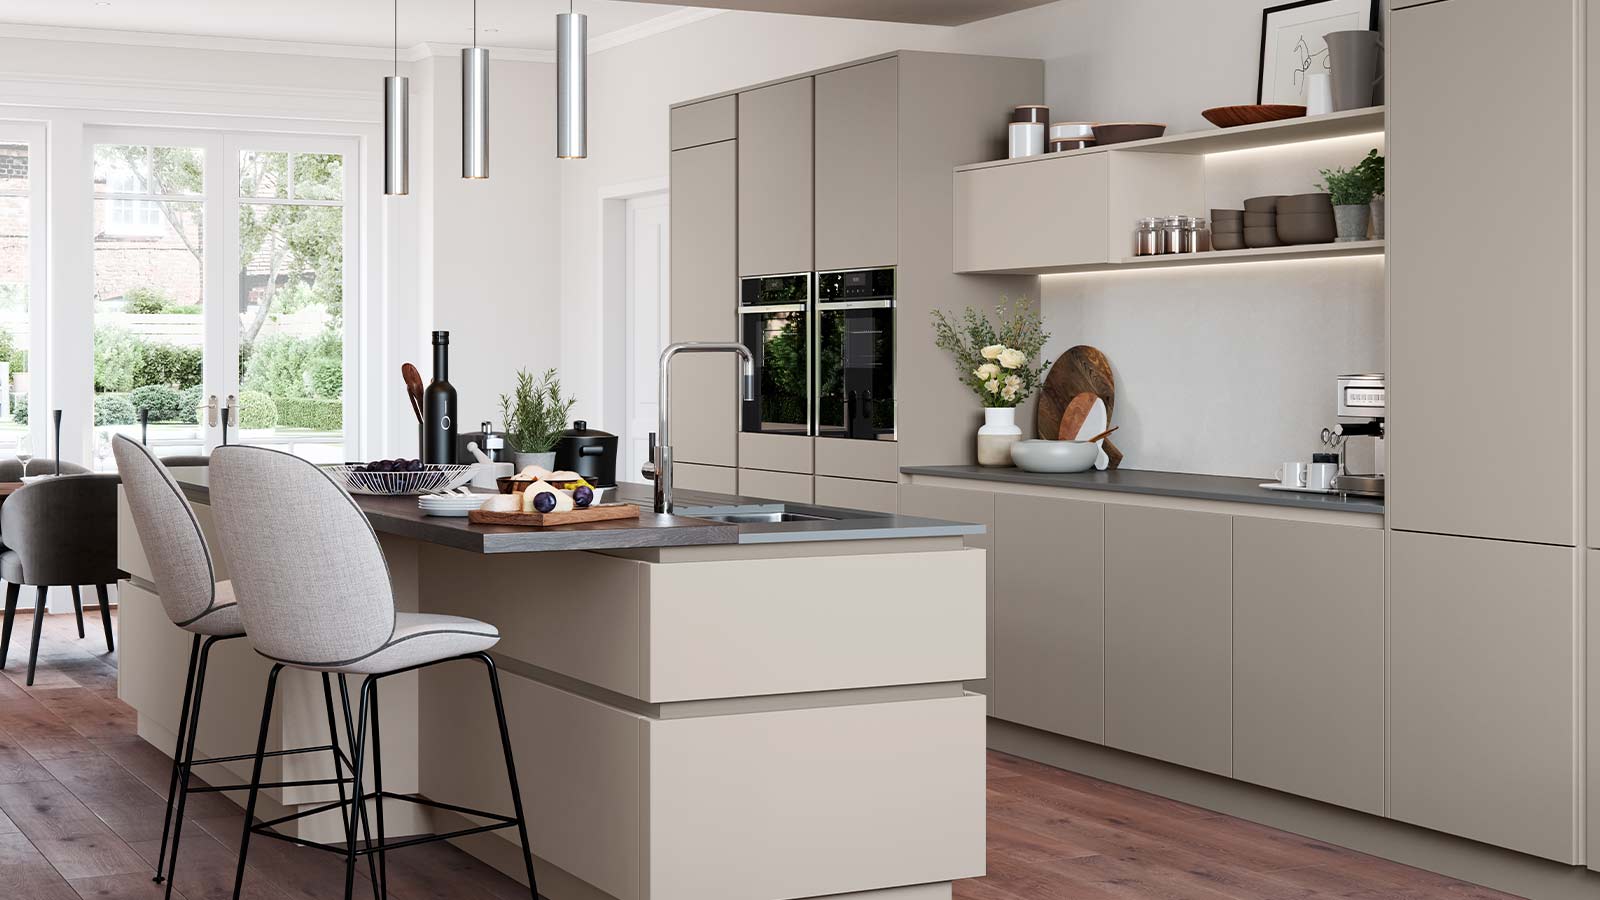 A modern handleless kitchen in grey